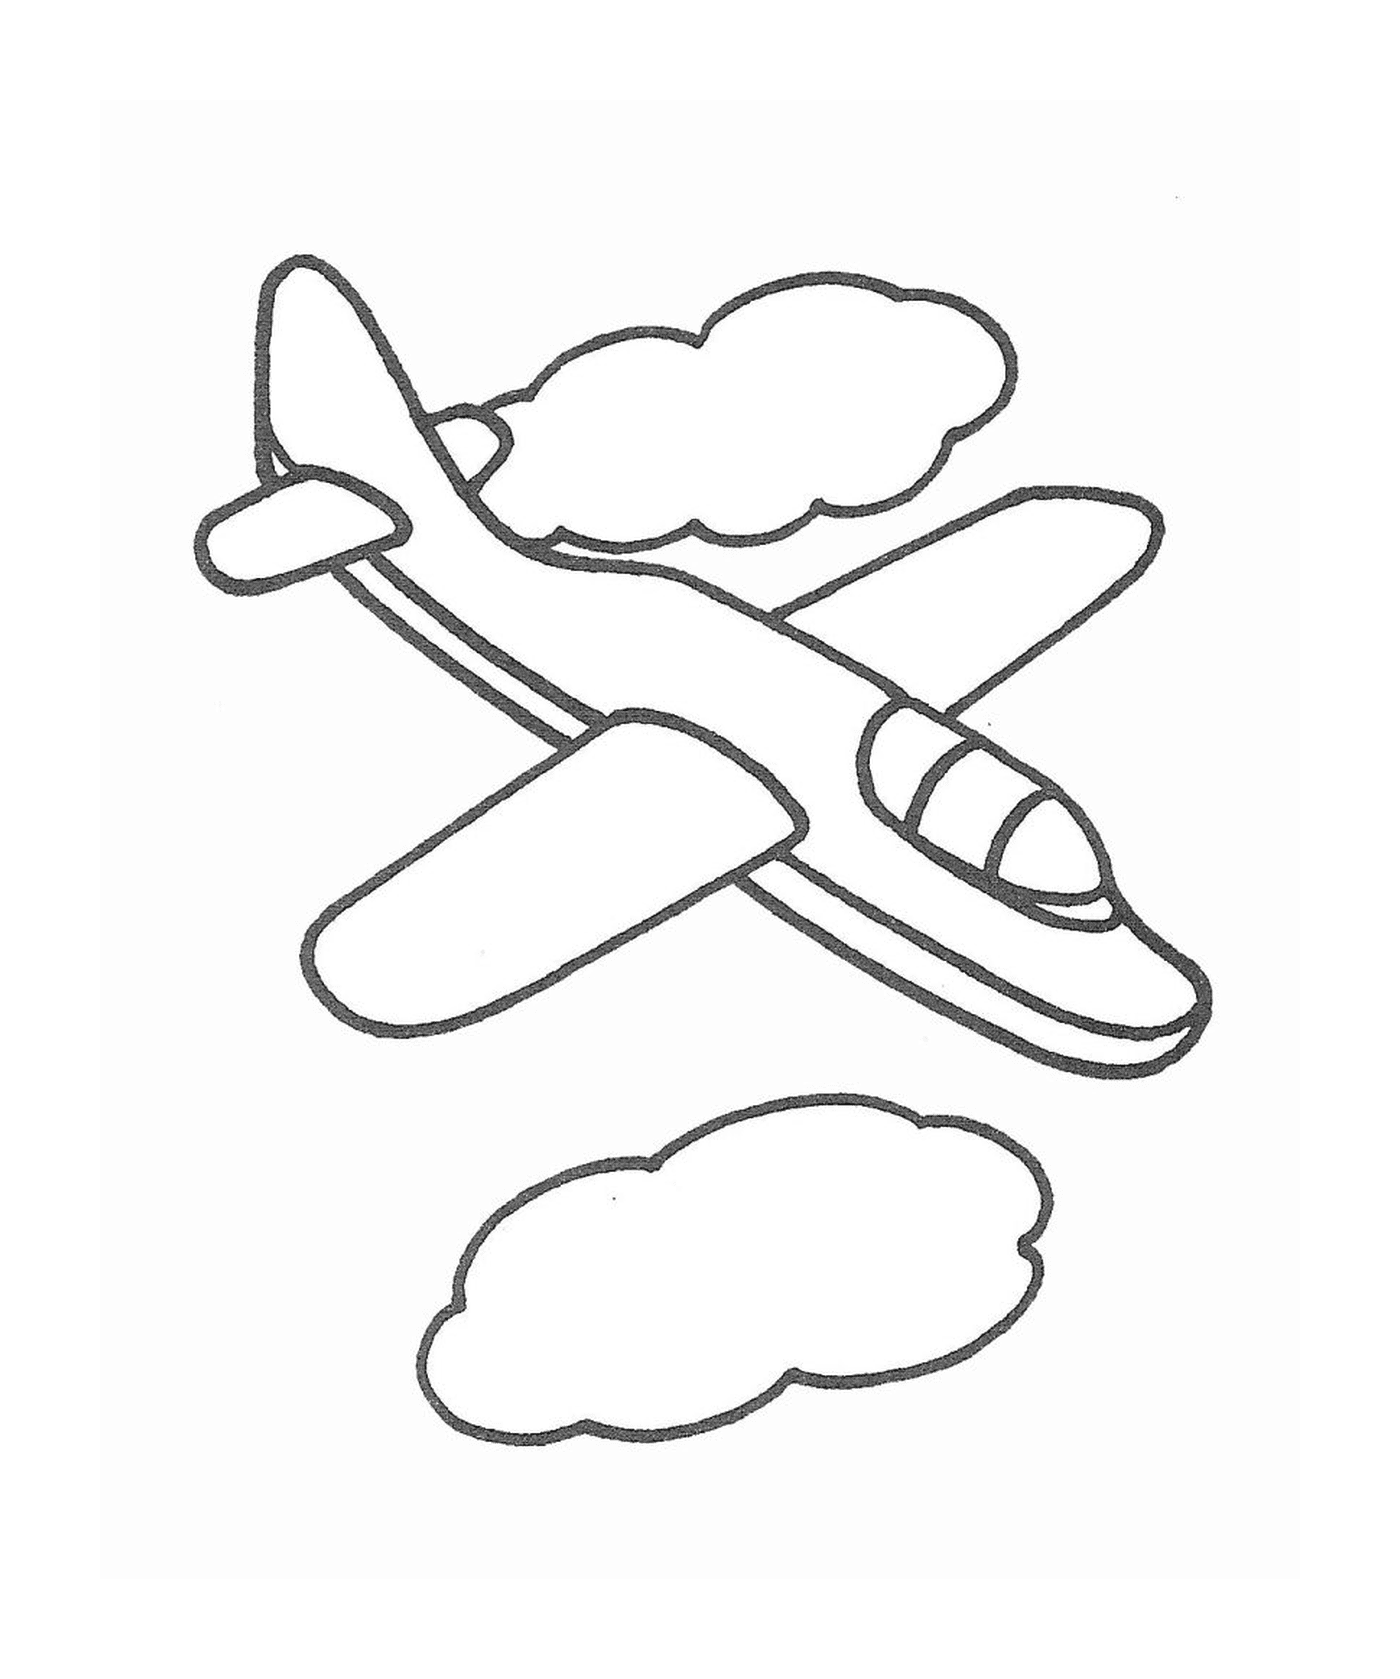  Un aereo vola nel cielo con le nuvole 